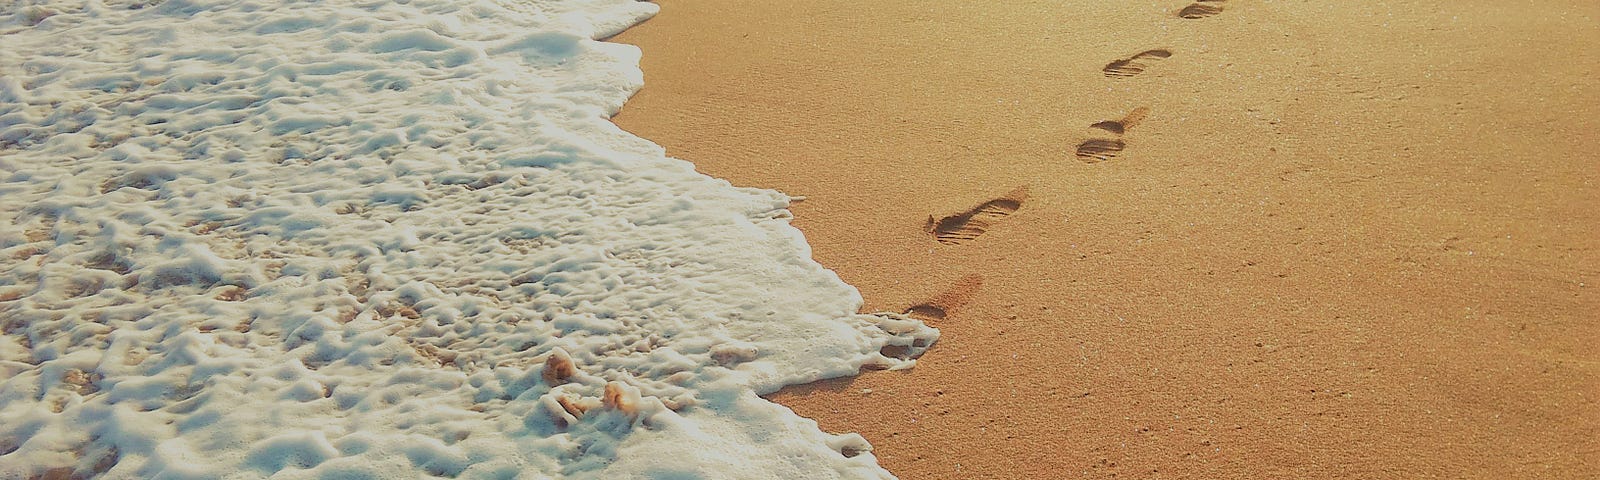 Surf foams washing over a set of footprints on a sandy beach.